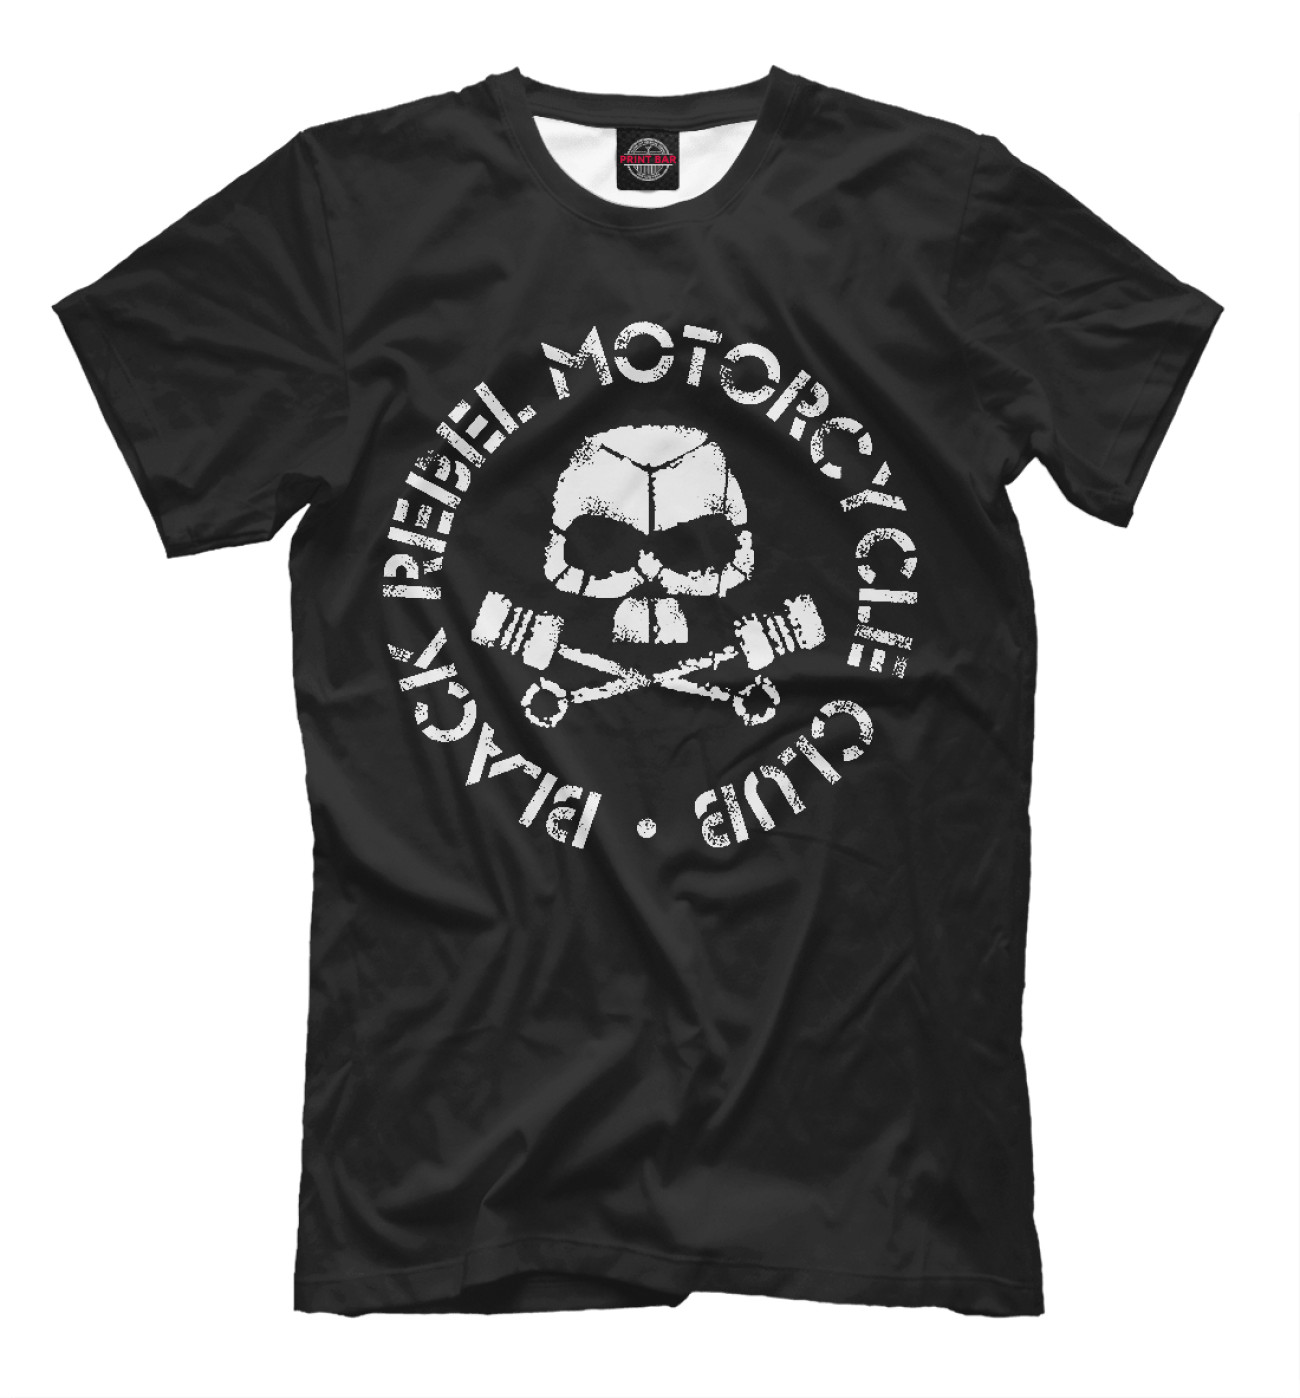 Мужская Футболка Black Rebel Motorcycle Club, артикул: MZK-895370-fut-2